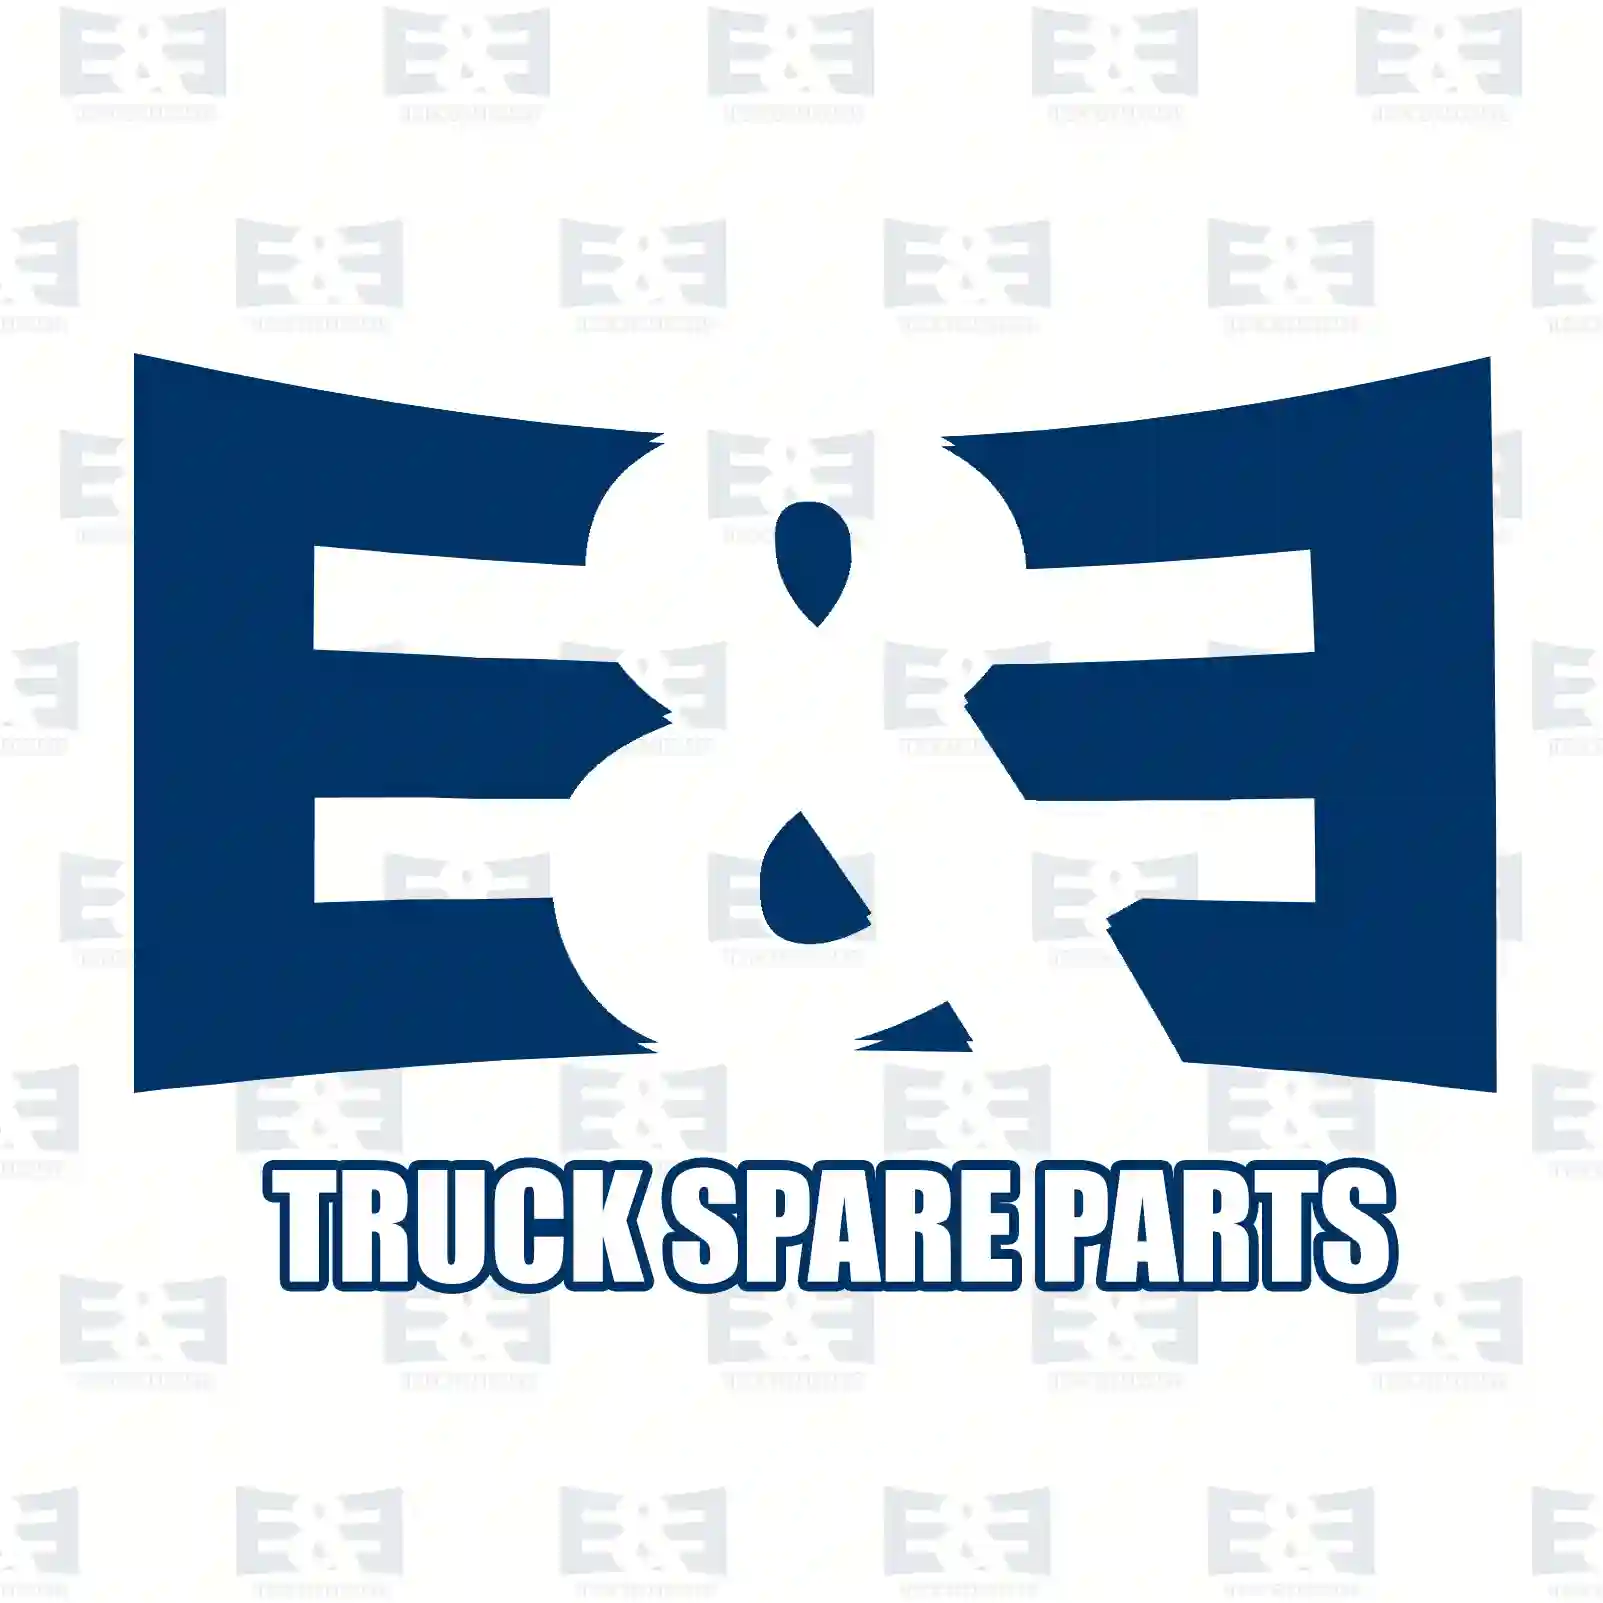 Foot brake valve, 2E2296898, 81521306149, 81521306222, , , ||  2E2296898 E&E Truck Spare Parts | Truck Spare Parts, Auotomotive Spare Parts Foot brake valve, 2E2296898, 81521306149, 81521306222, , , ||  2E2296898 E&E Truck Spare Parts | Truck Spare Parts, Auotomotive Spare Parts